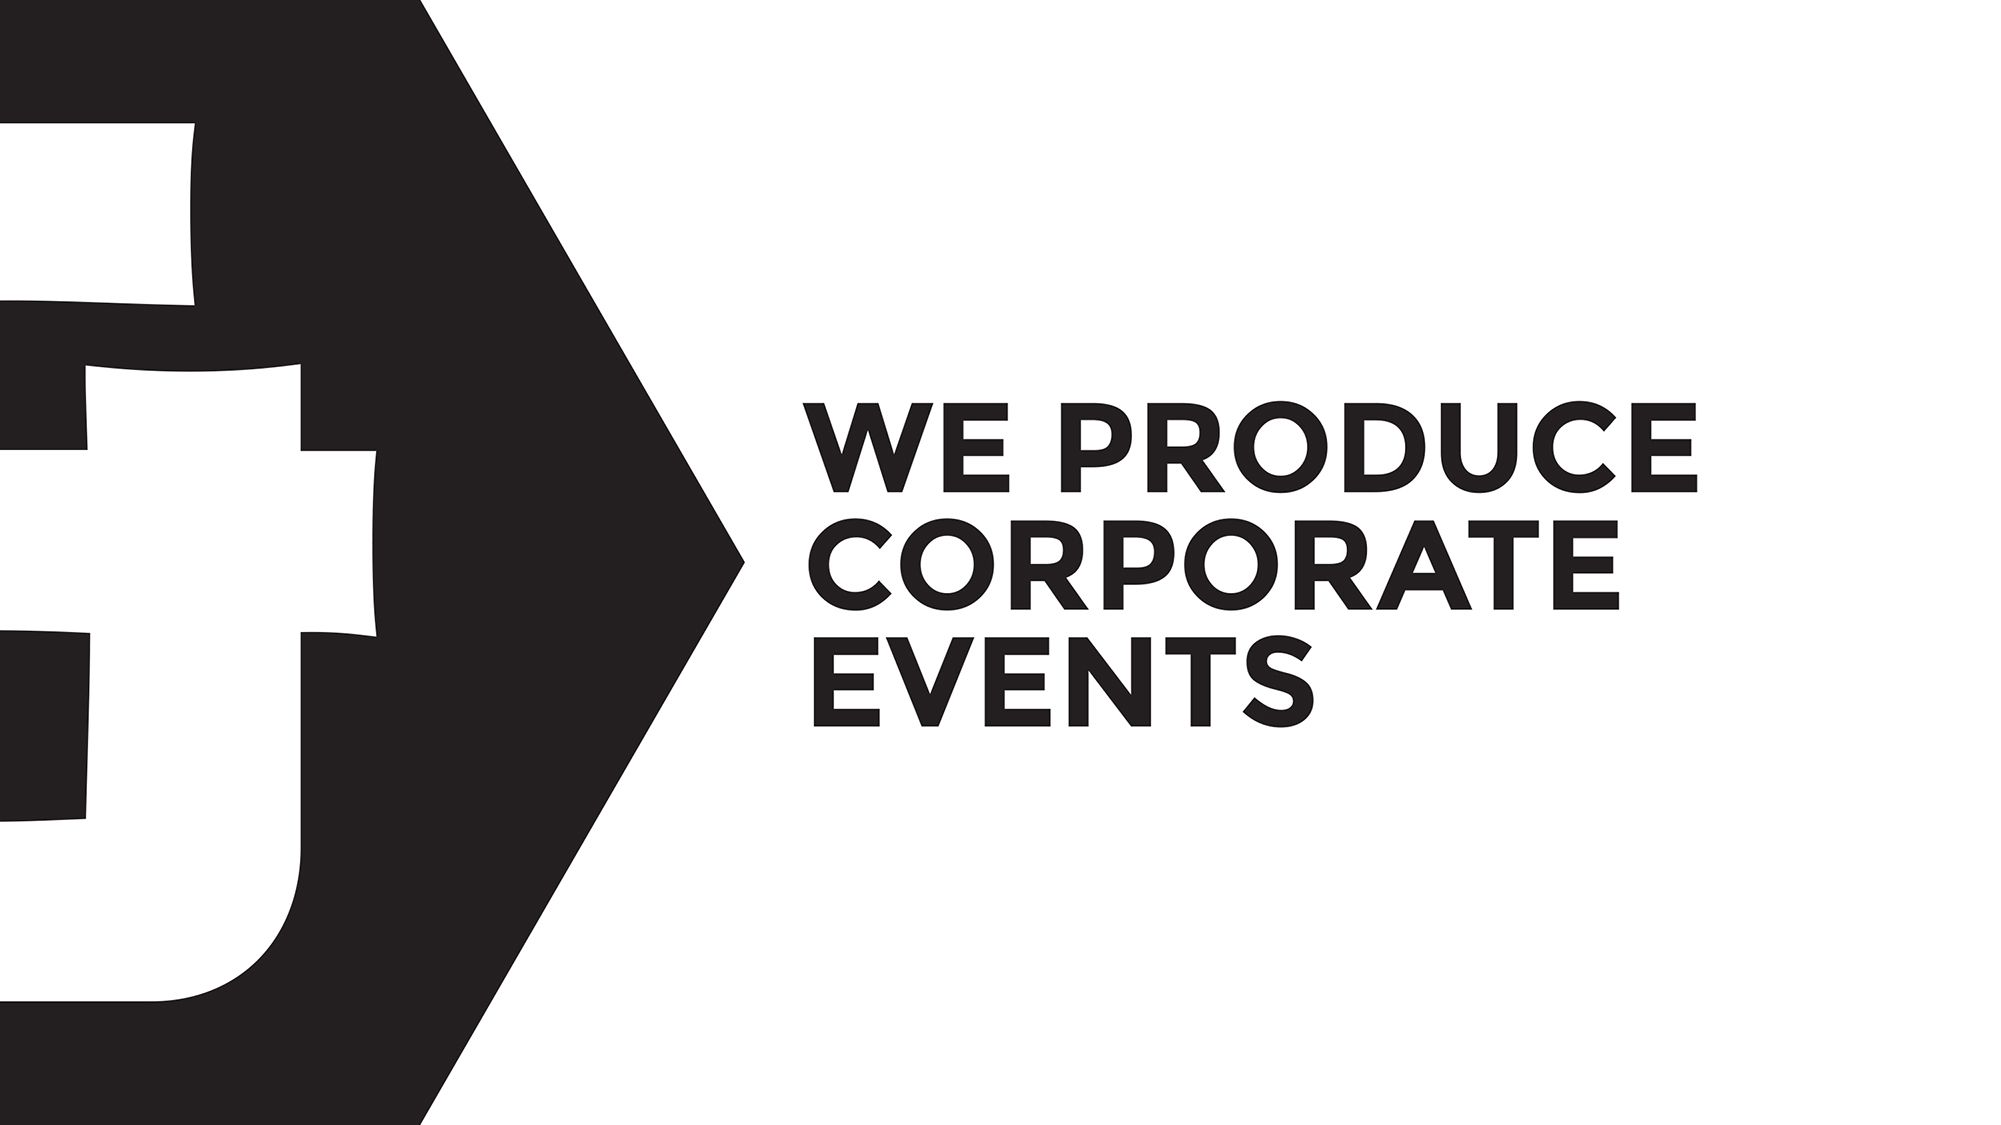 wm&d: We produce corporate events